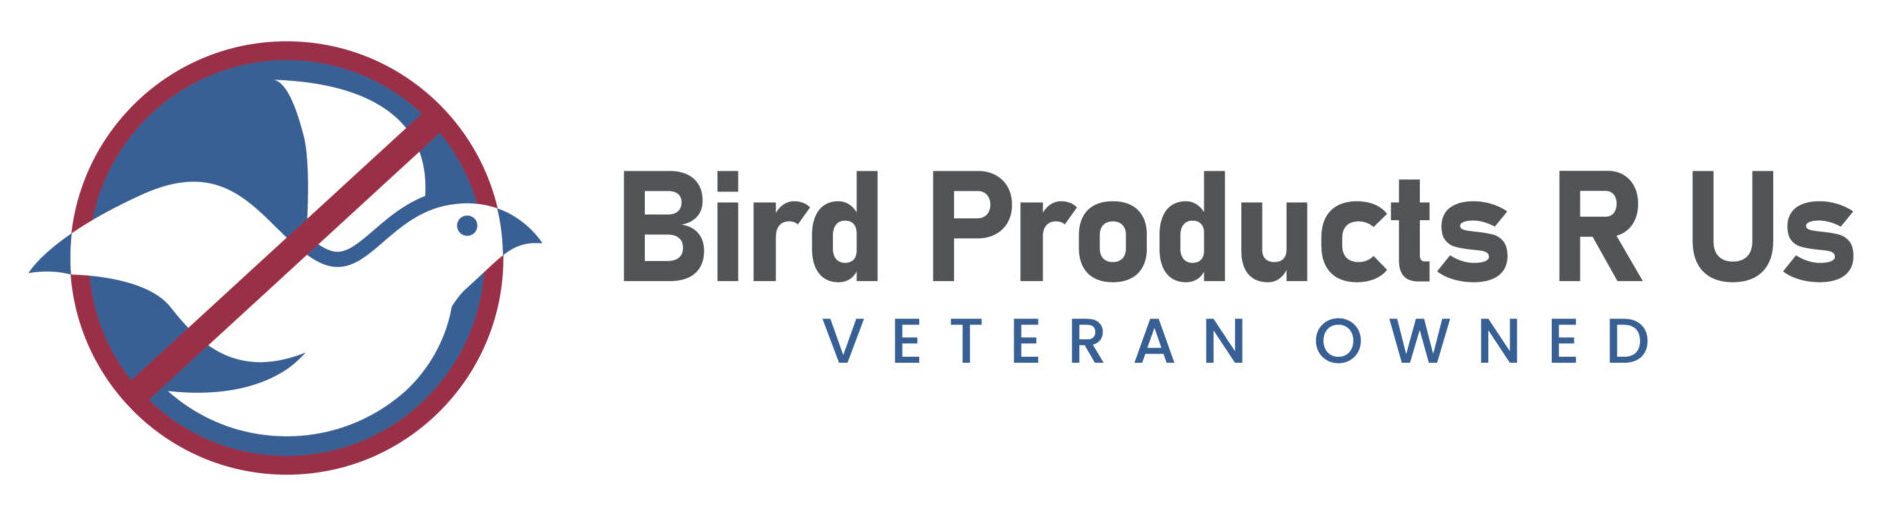 Bird Products R Us